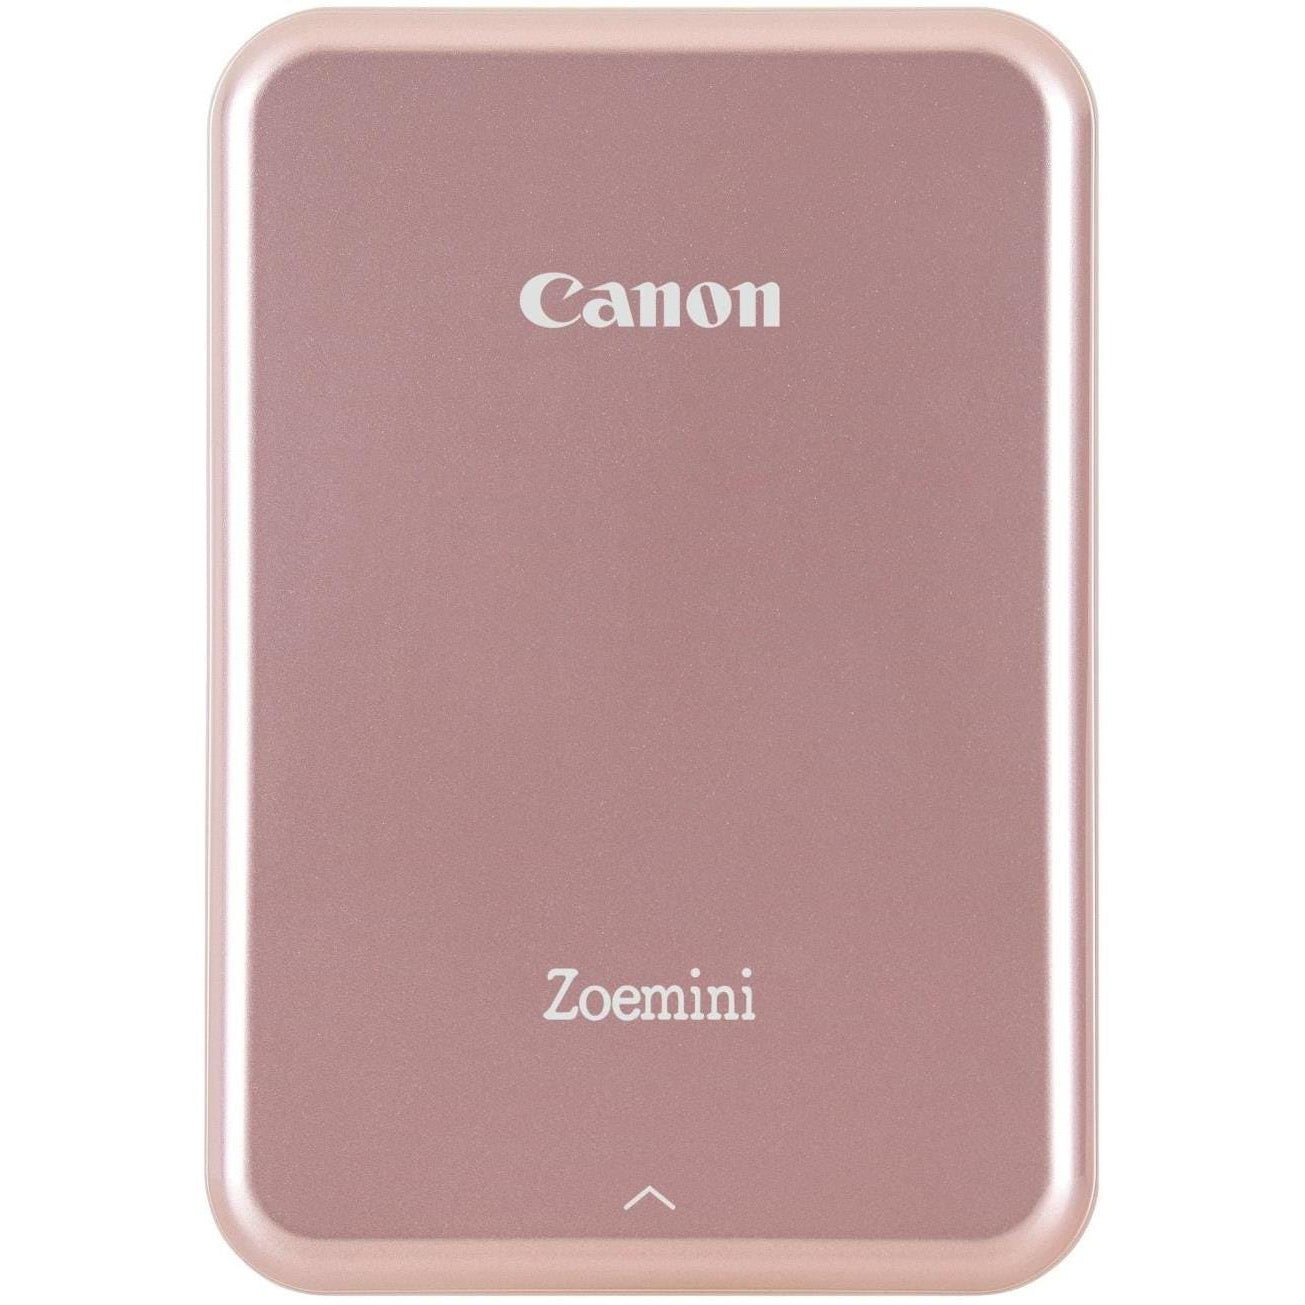 Canon Zoemini Slim Body Pocket-Sized Wireless Photo Printer - Rose Gold